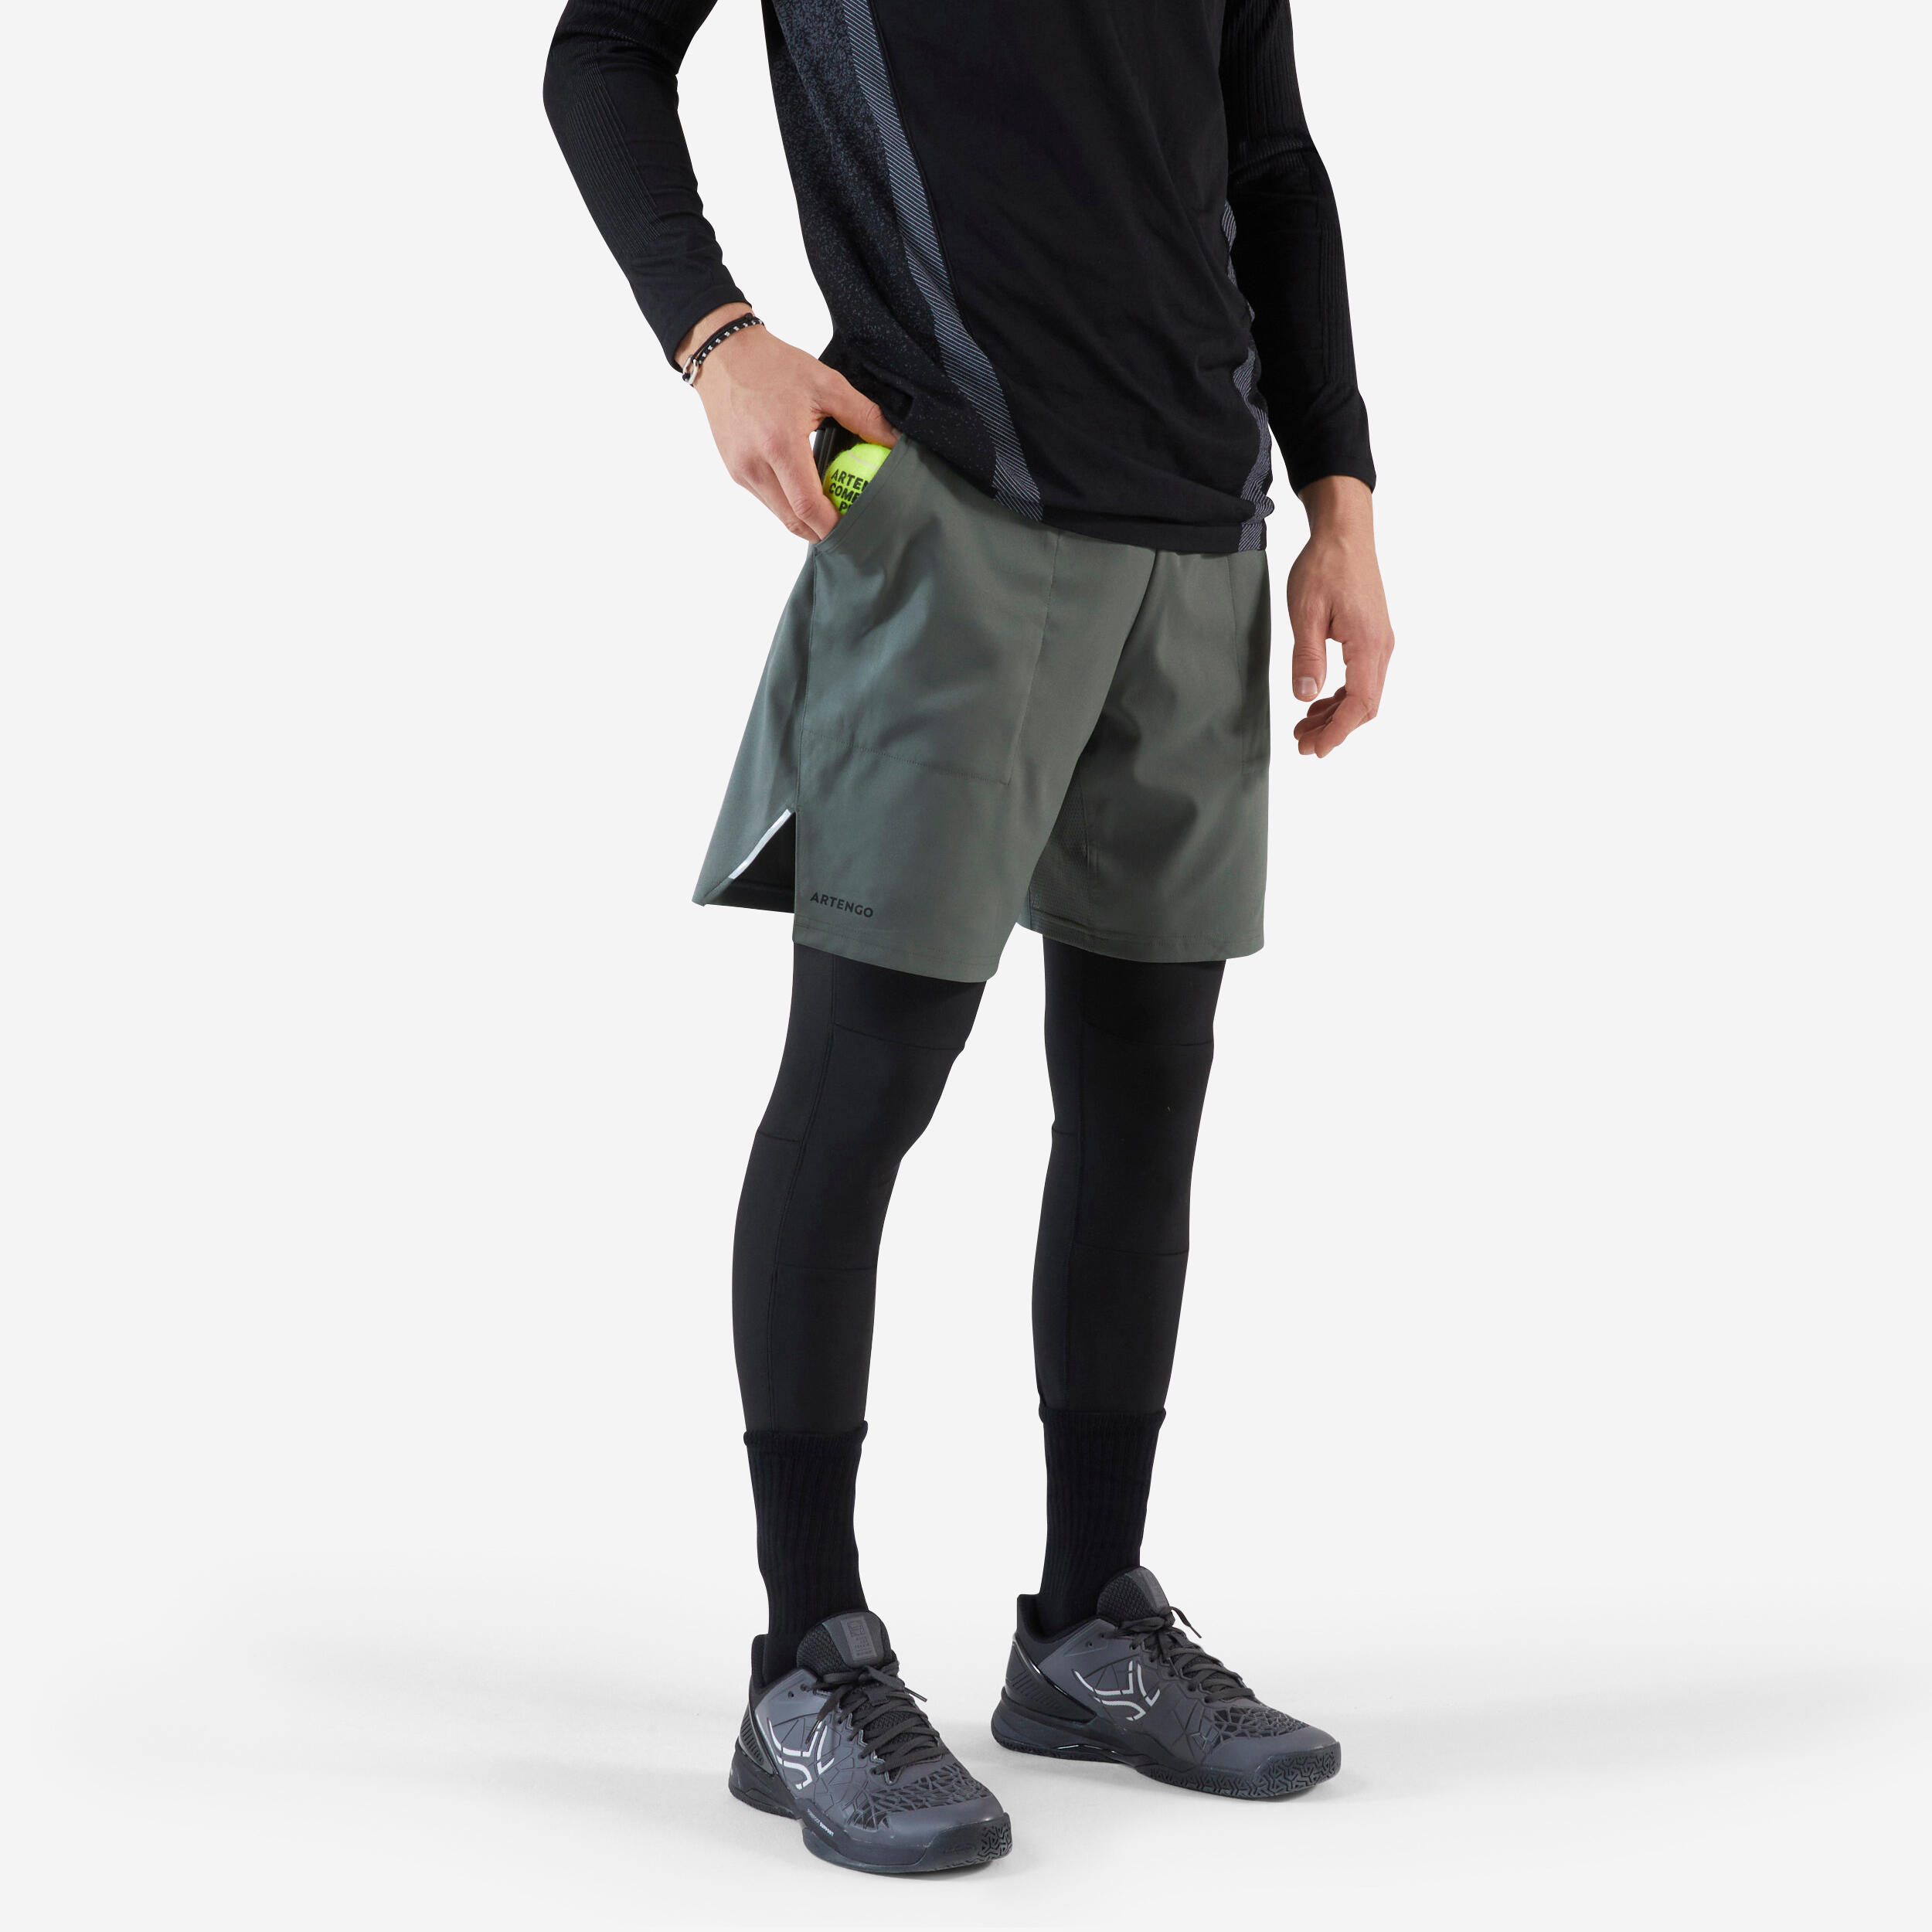 2-in-1 Legging Shorts Thermic - Grey Khaki/Black 1/8